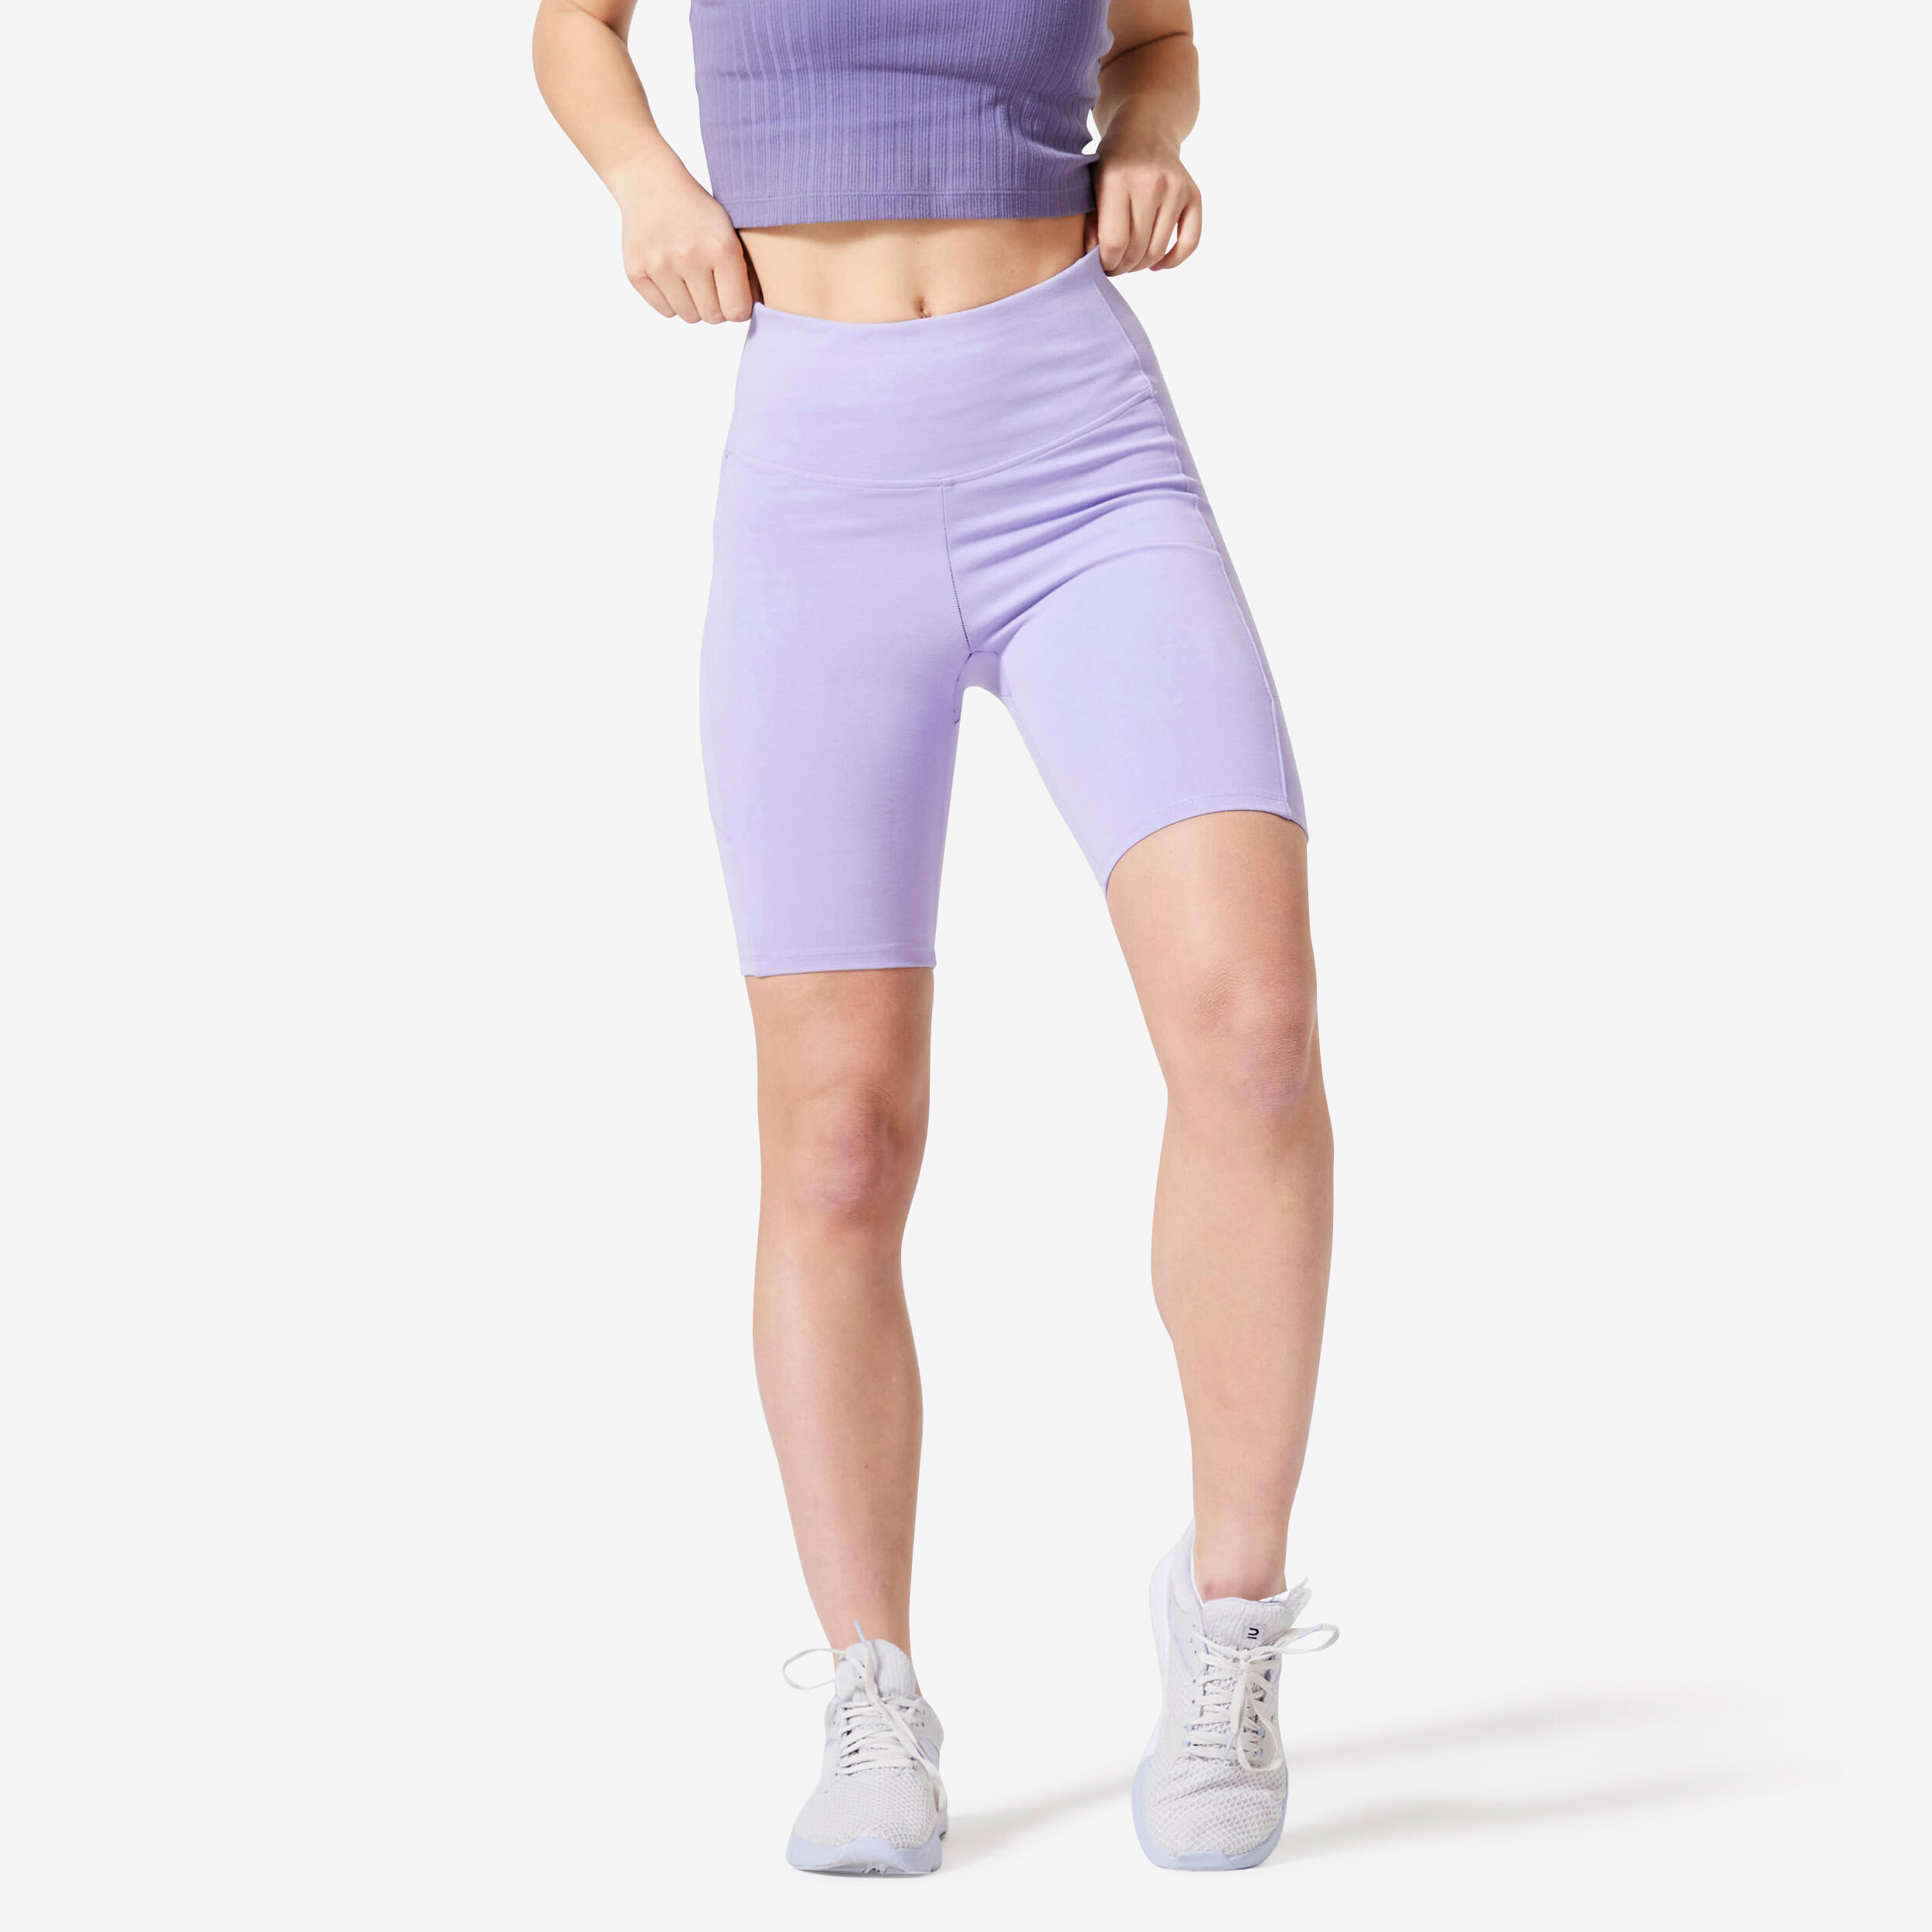 Decathlon UK Domyos Women's Shaping Fitness Cycling Shorts 520 - Neon Purple